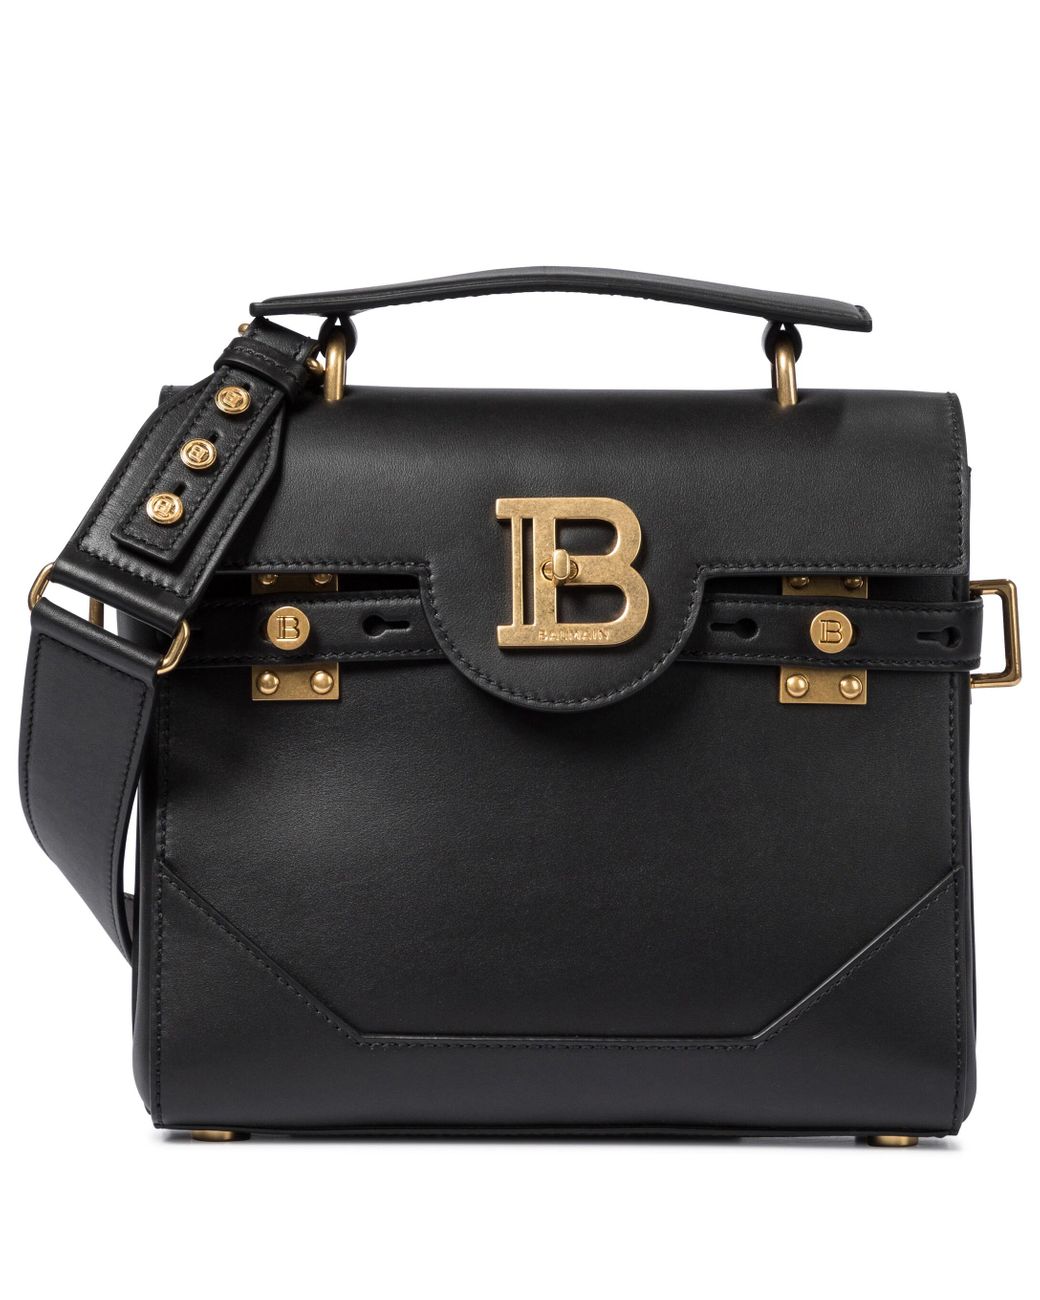 Balmain B-buzz 23 Leather Shoulder Bag in Black - Lyst